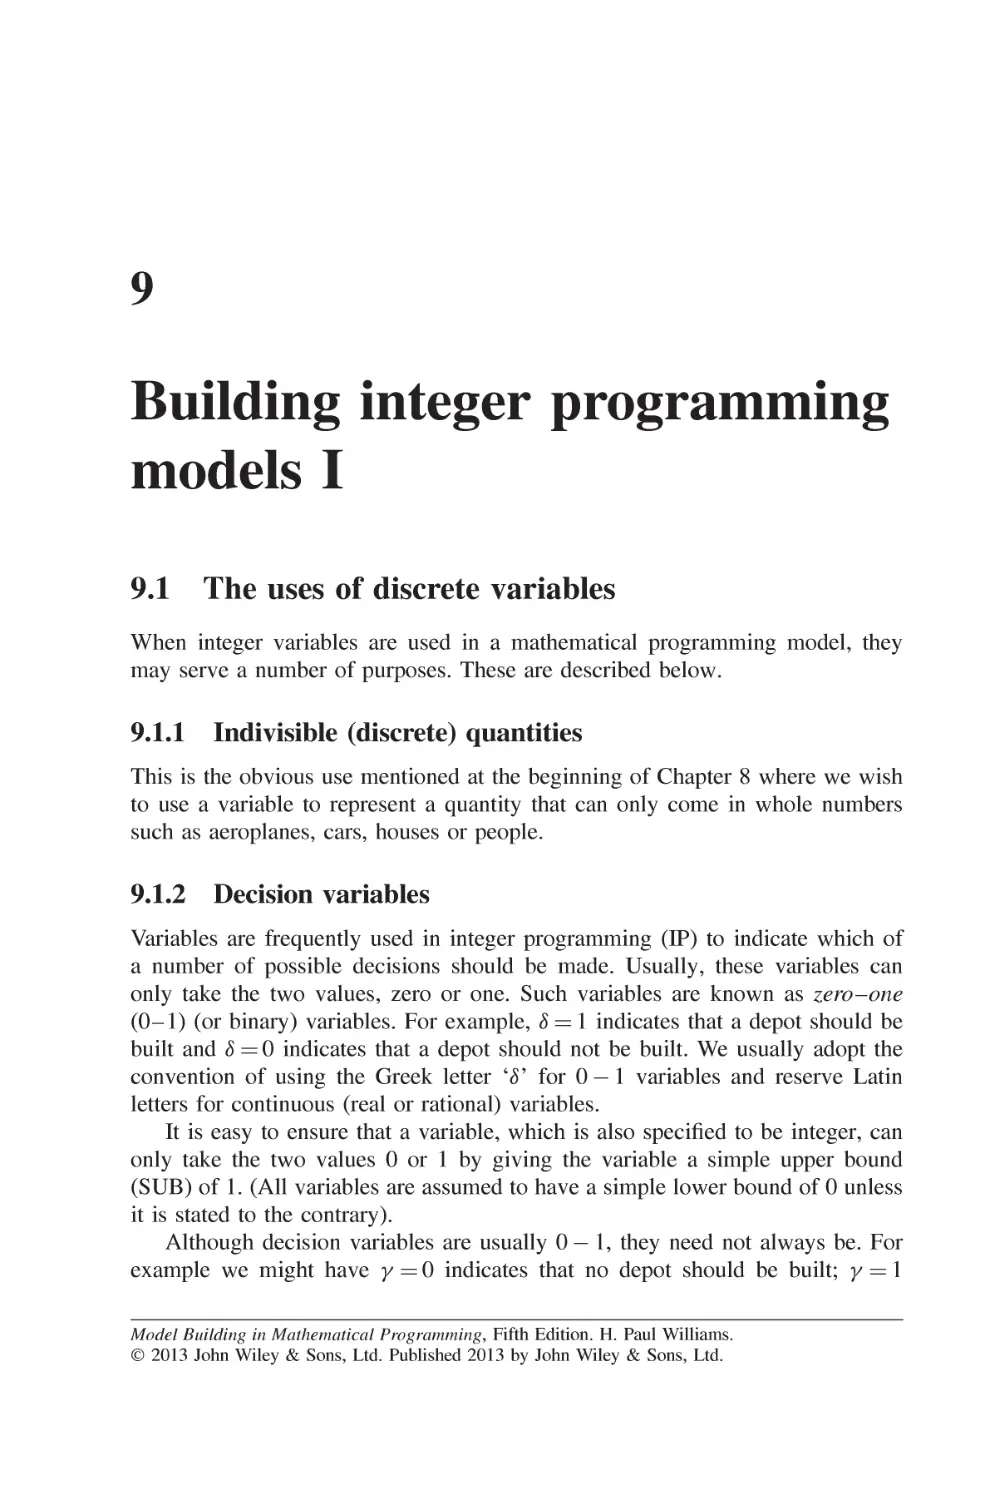 Chapter 9 Building integer programming models I
9.1.2 Decision variables